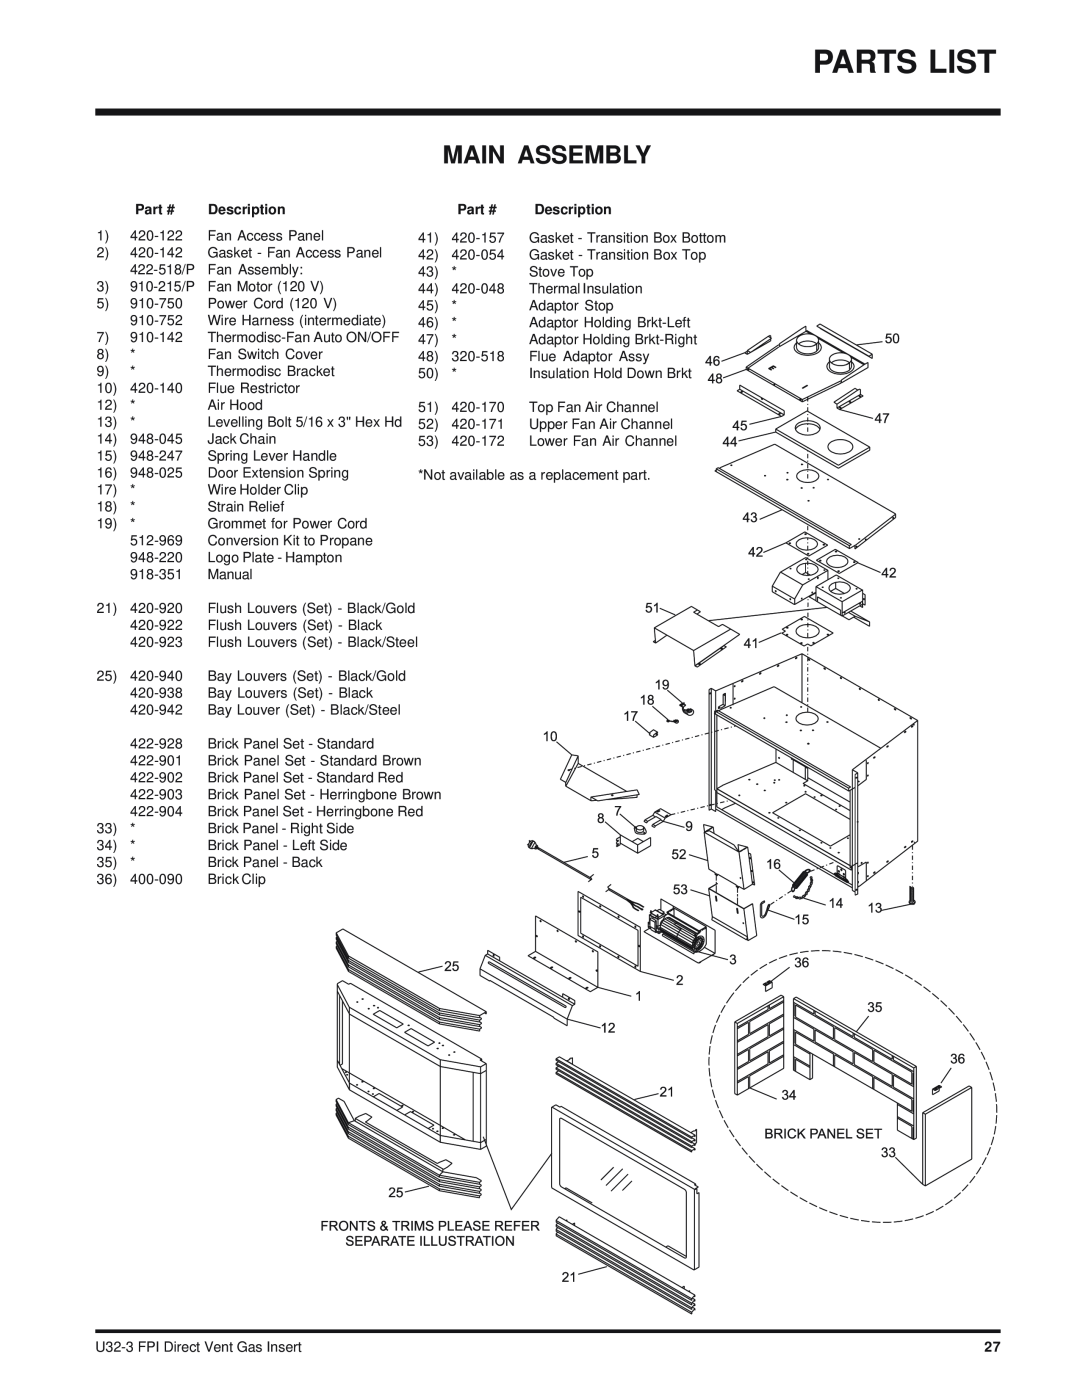 Regency U32-NG3 installation manual Parts List, Main Assembly 